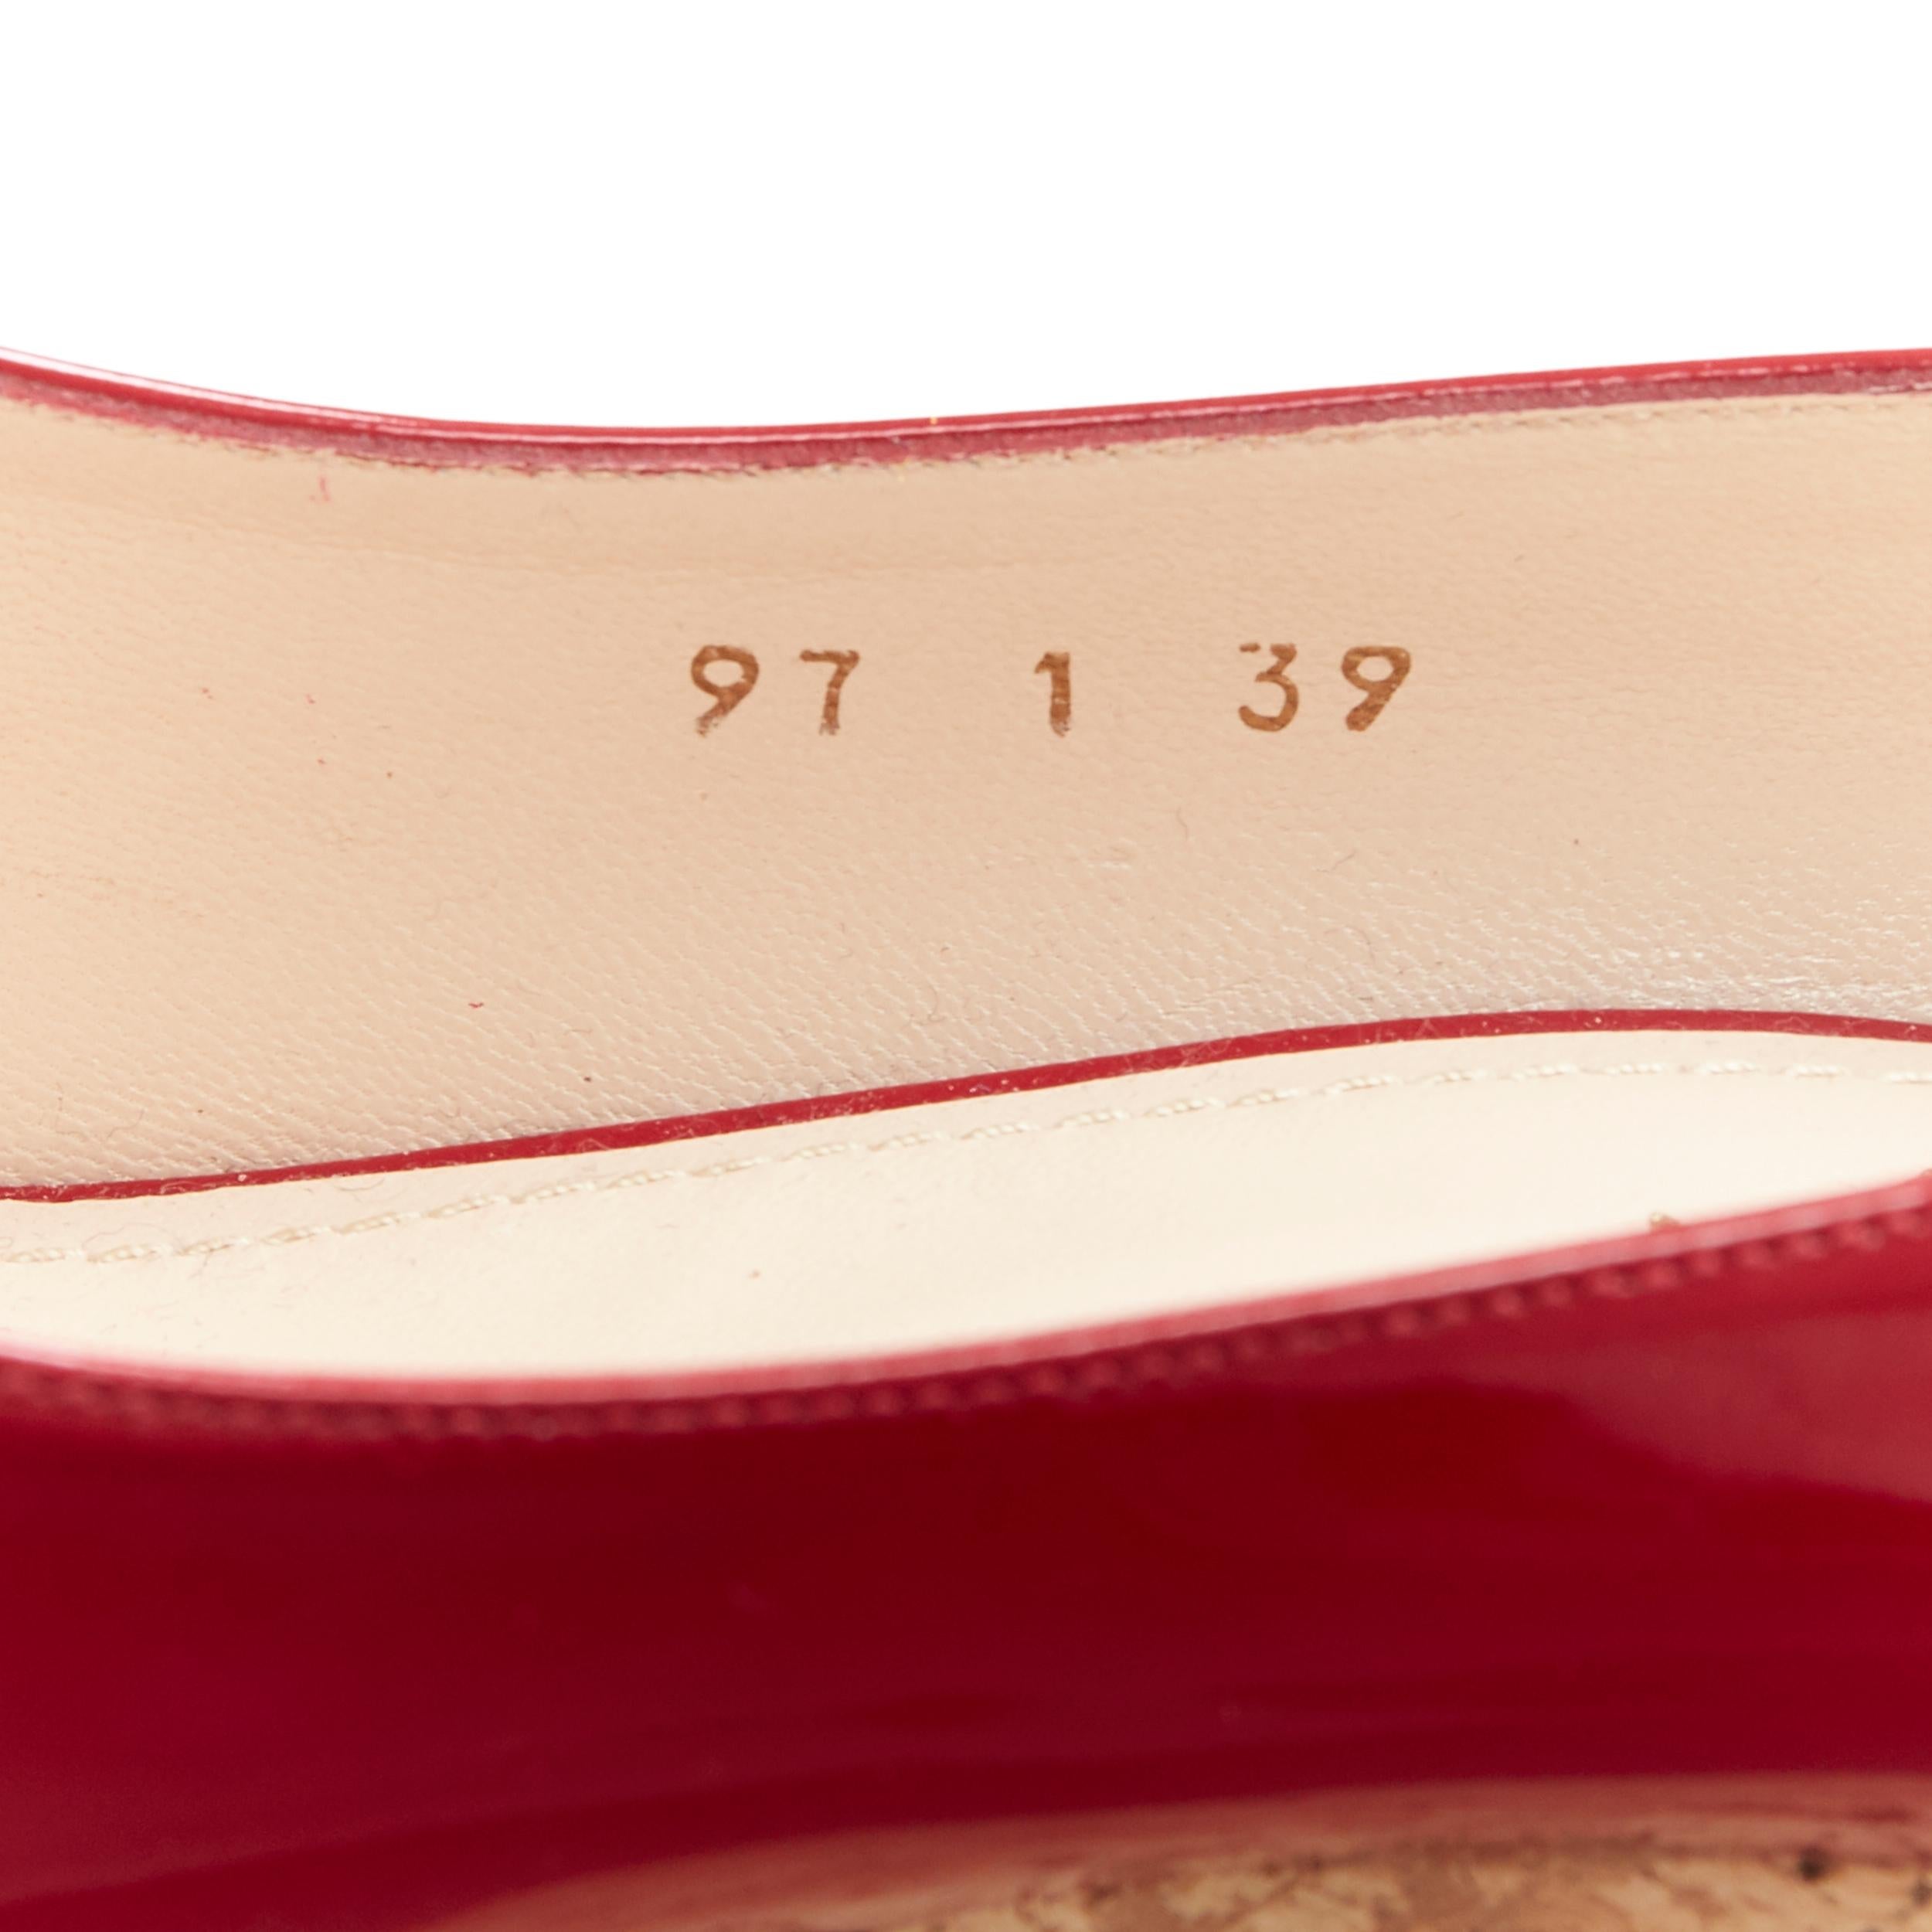 YVES SAINT LAURENT YSL red patent leather round toe cork wedge platform EU39 5